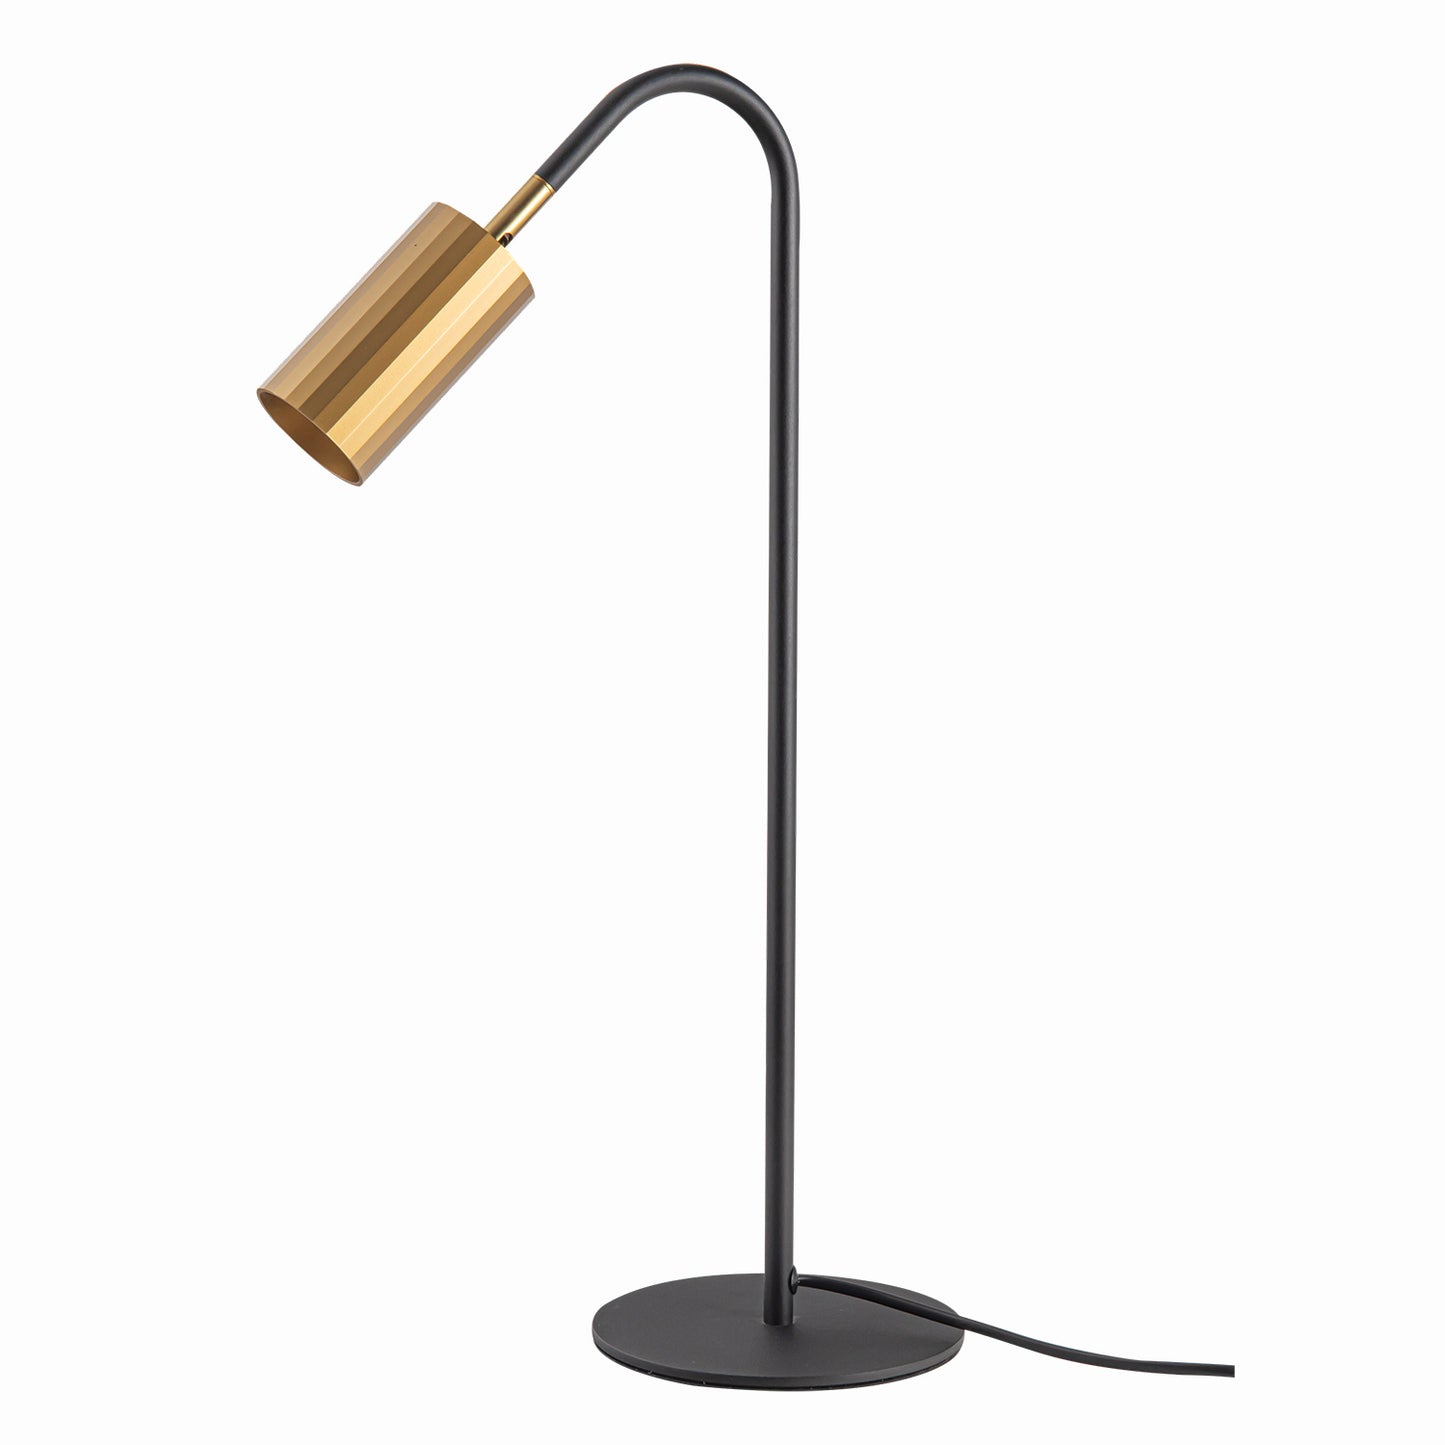 MJ-1718 Table Lamp